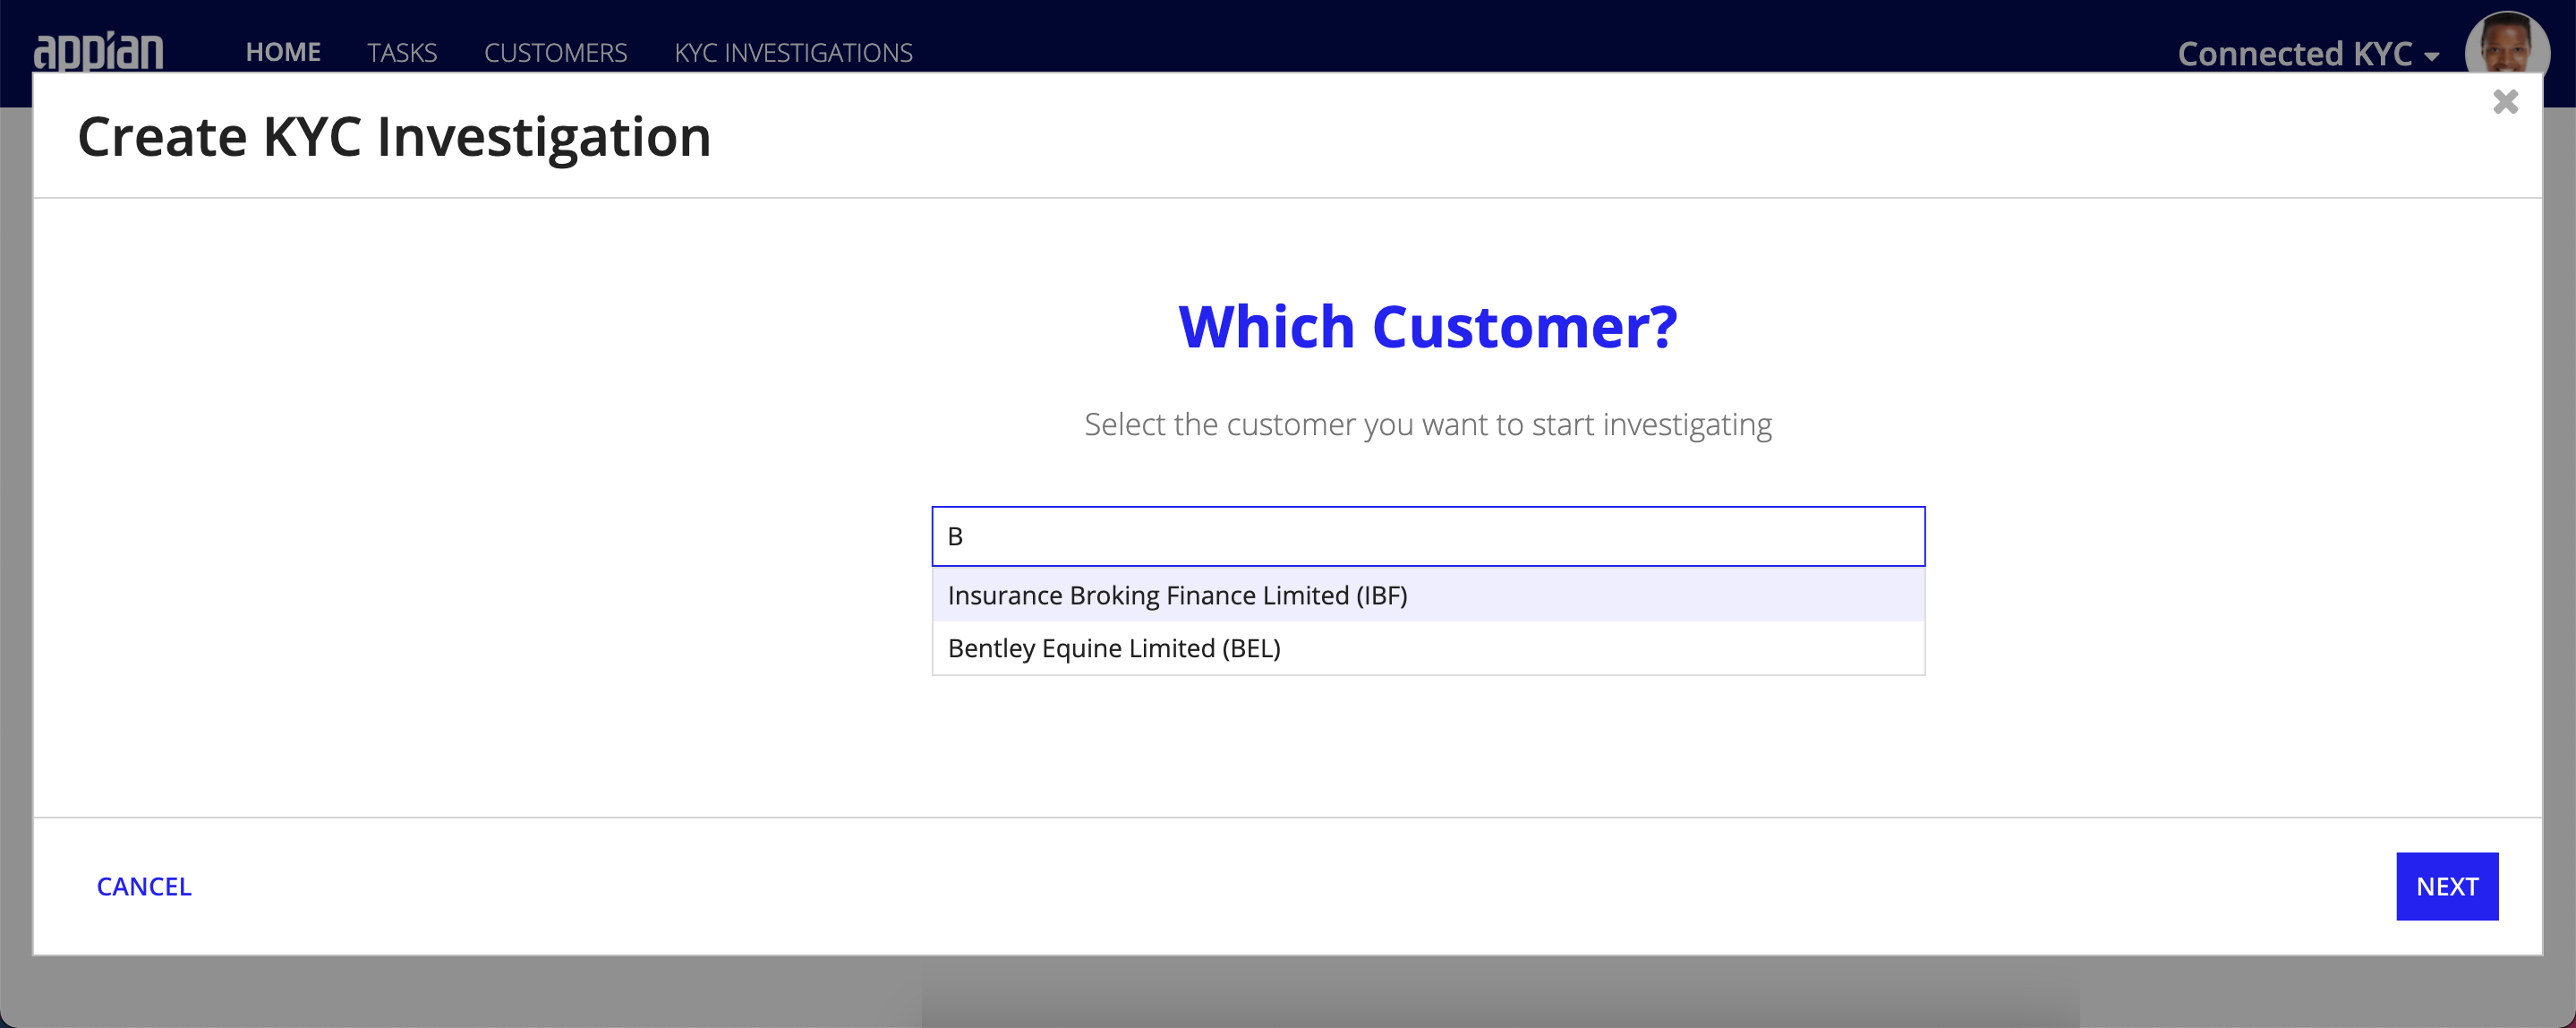 select_customer.png